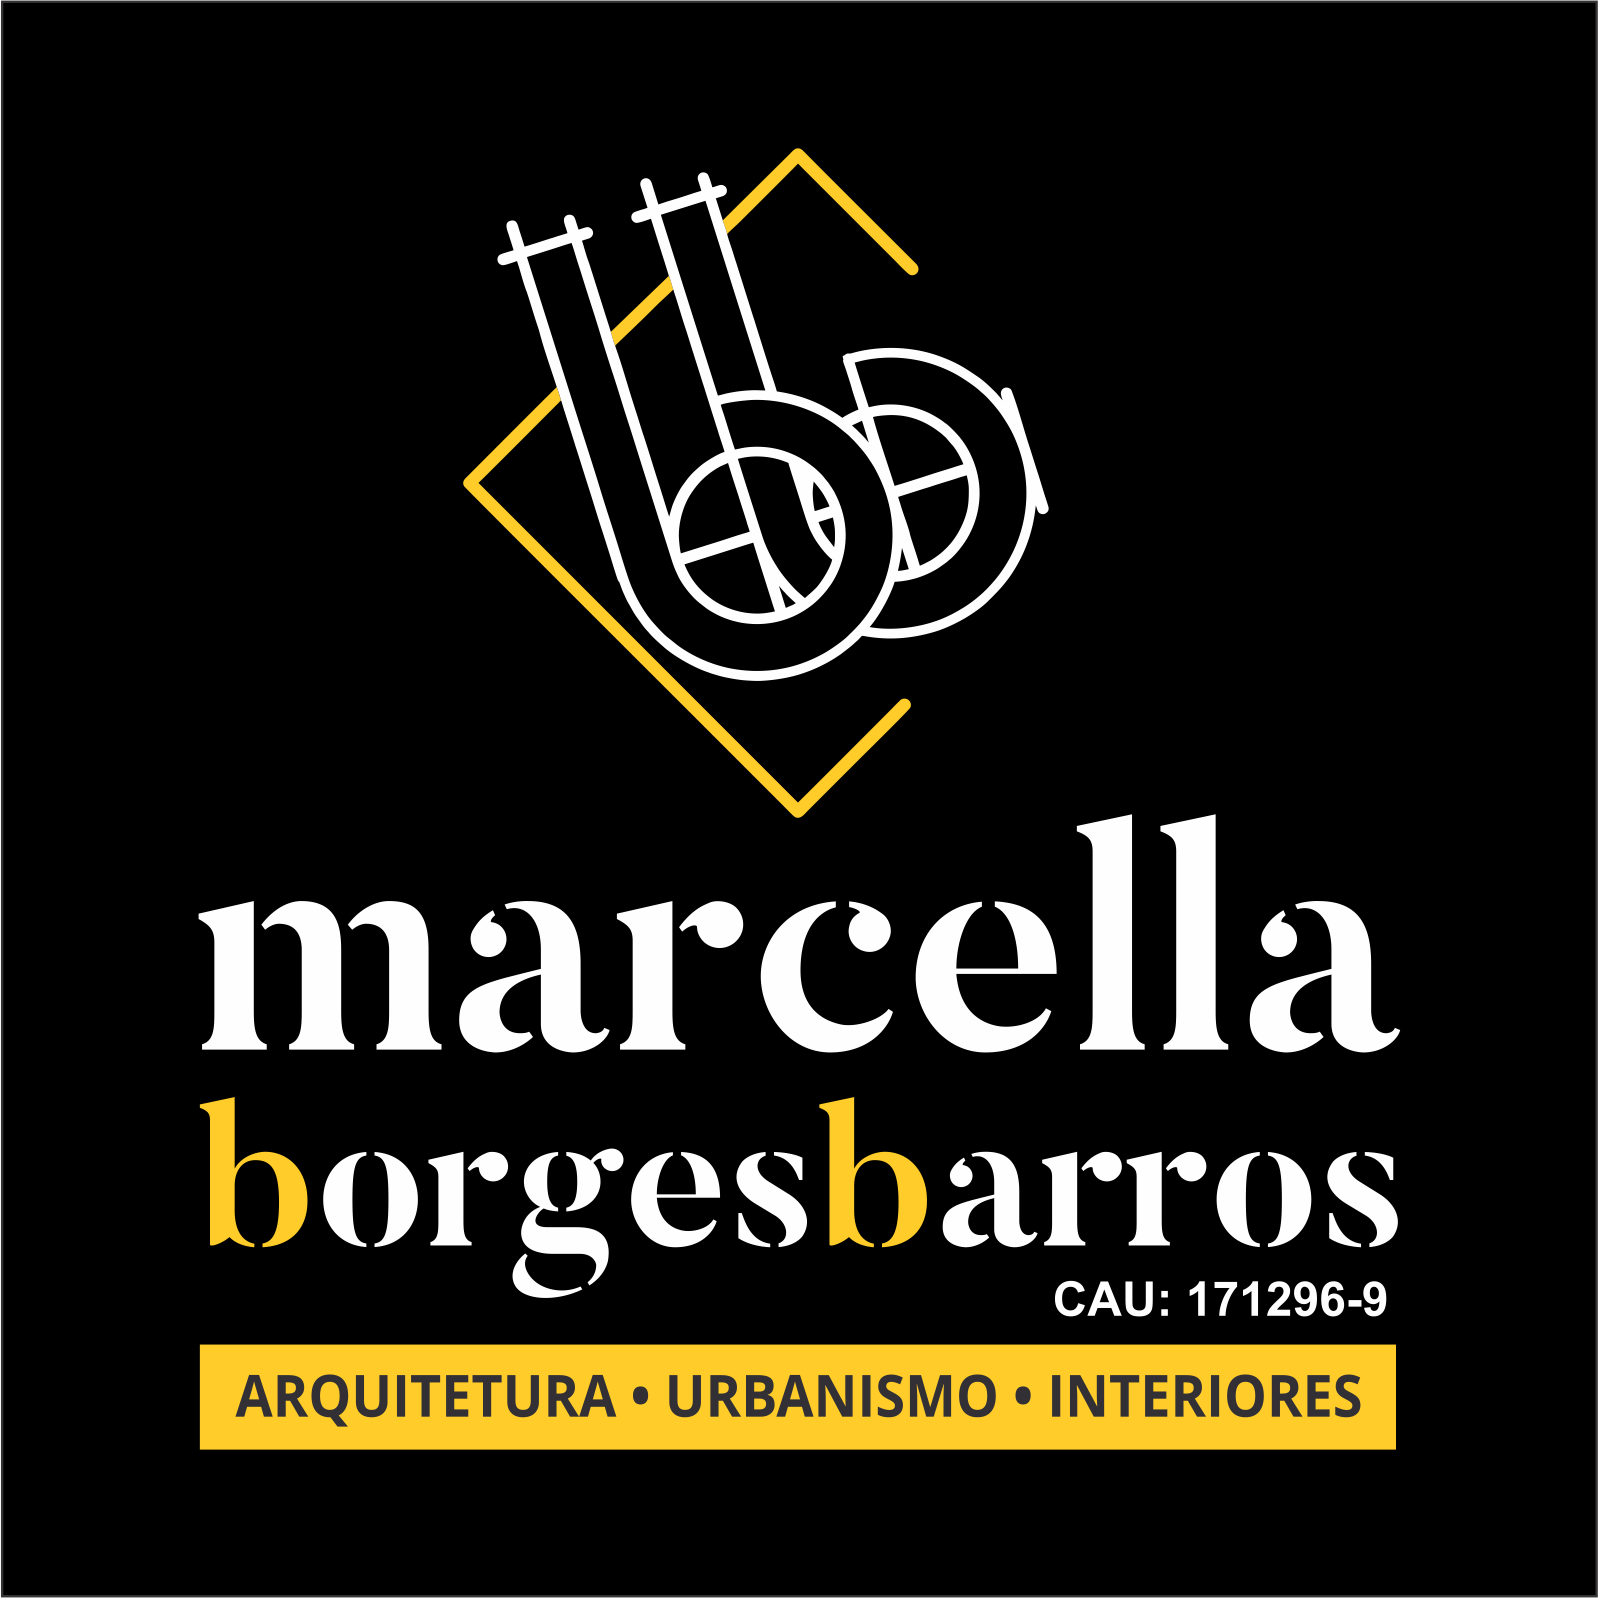 MARCELLA BORGES BARROS ARQUITETA